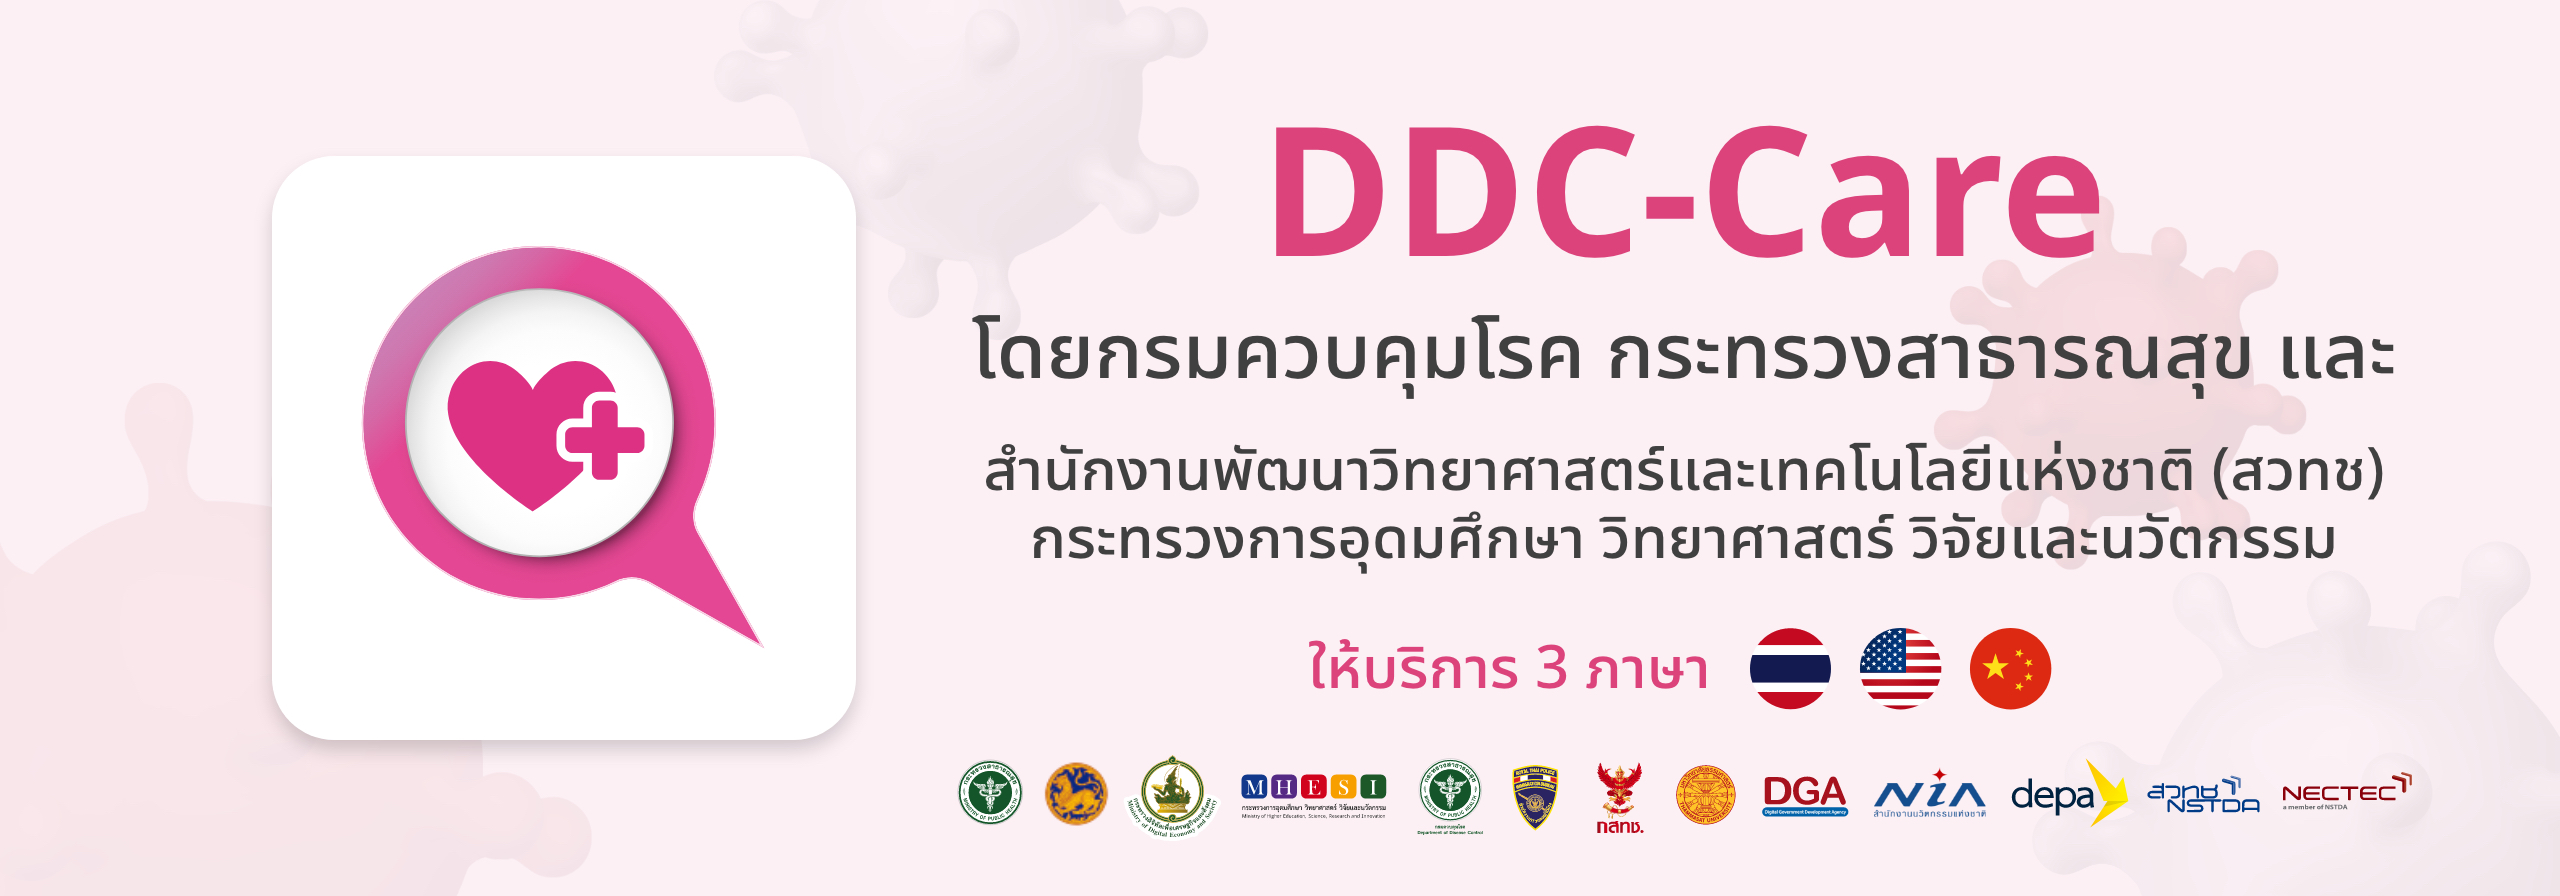 DDC-Care